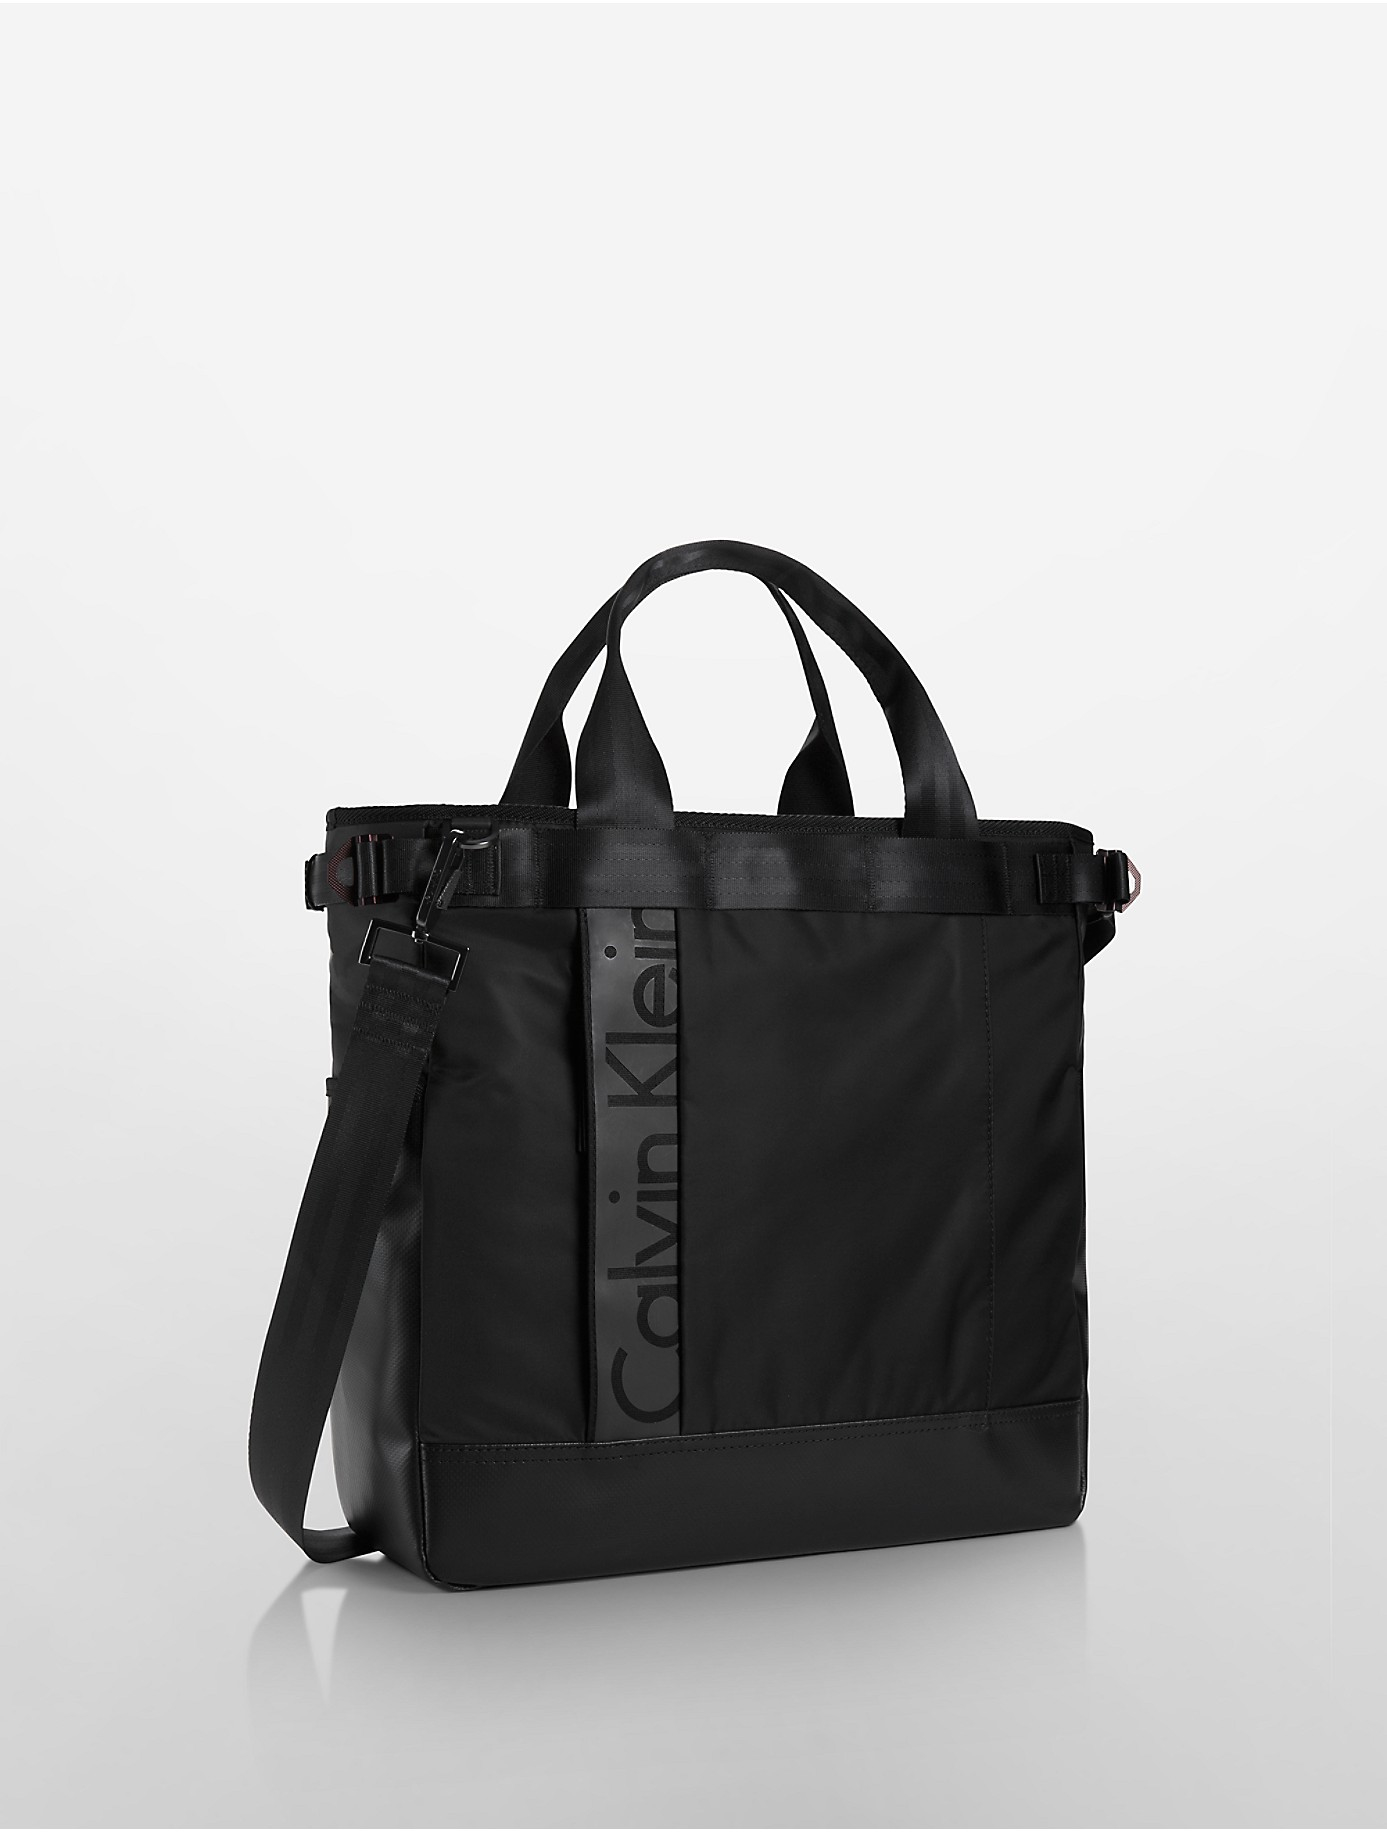 Calvin Klein Jeans Pilot Tote Bag in Black for Men - Lyst